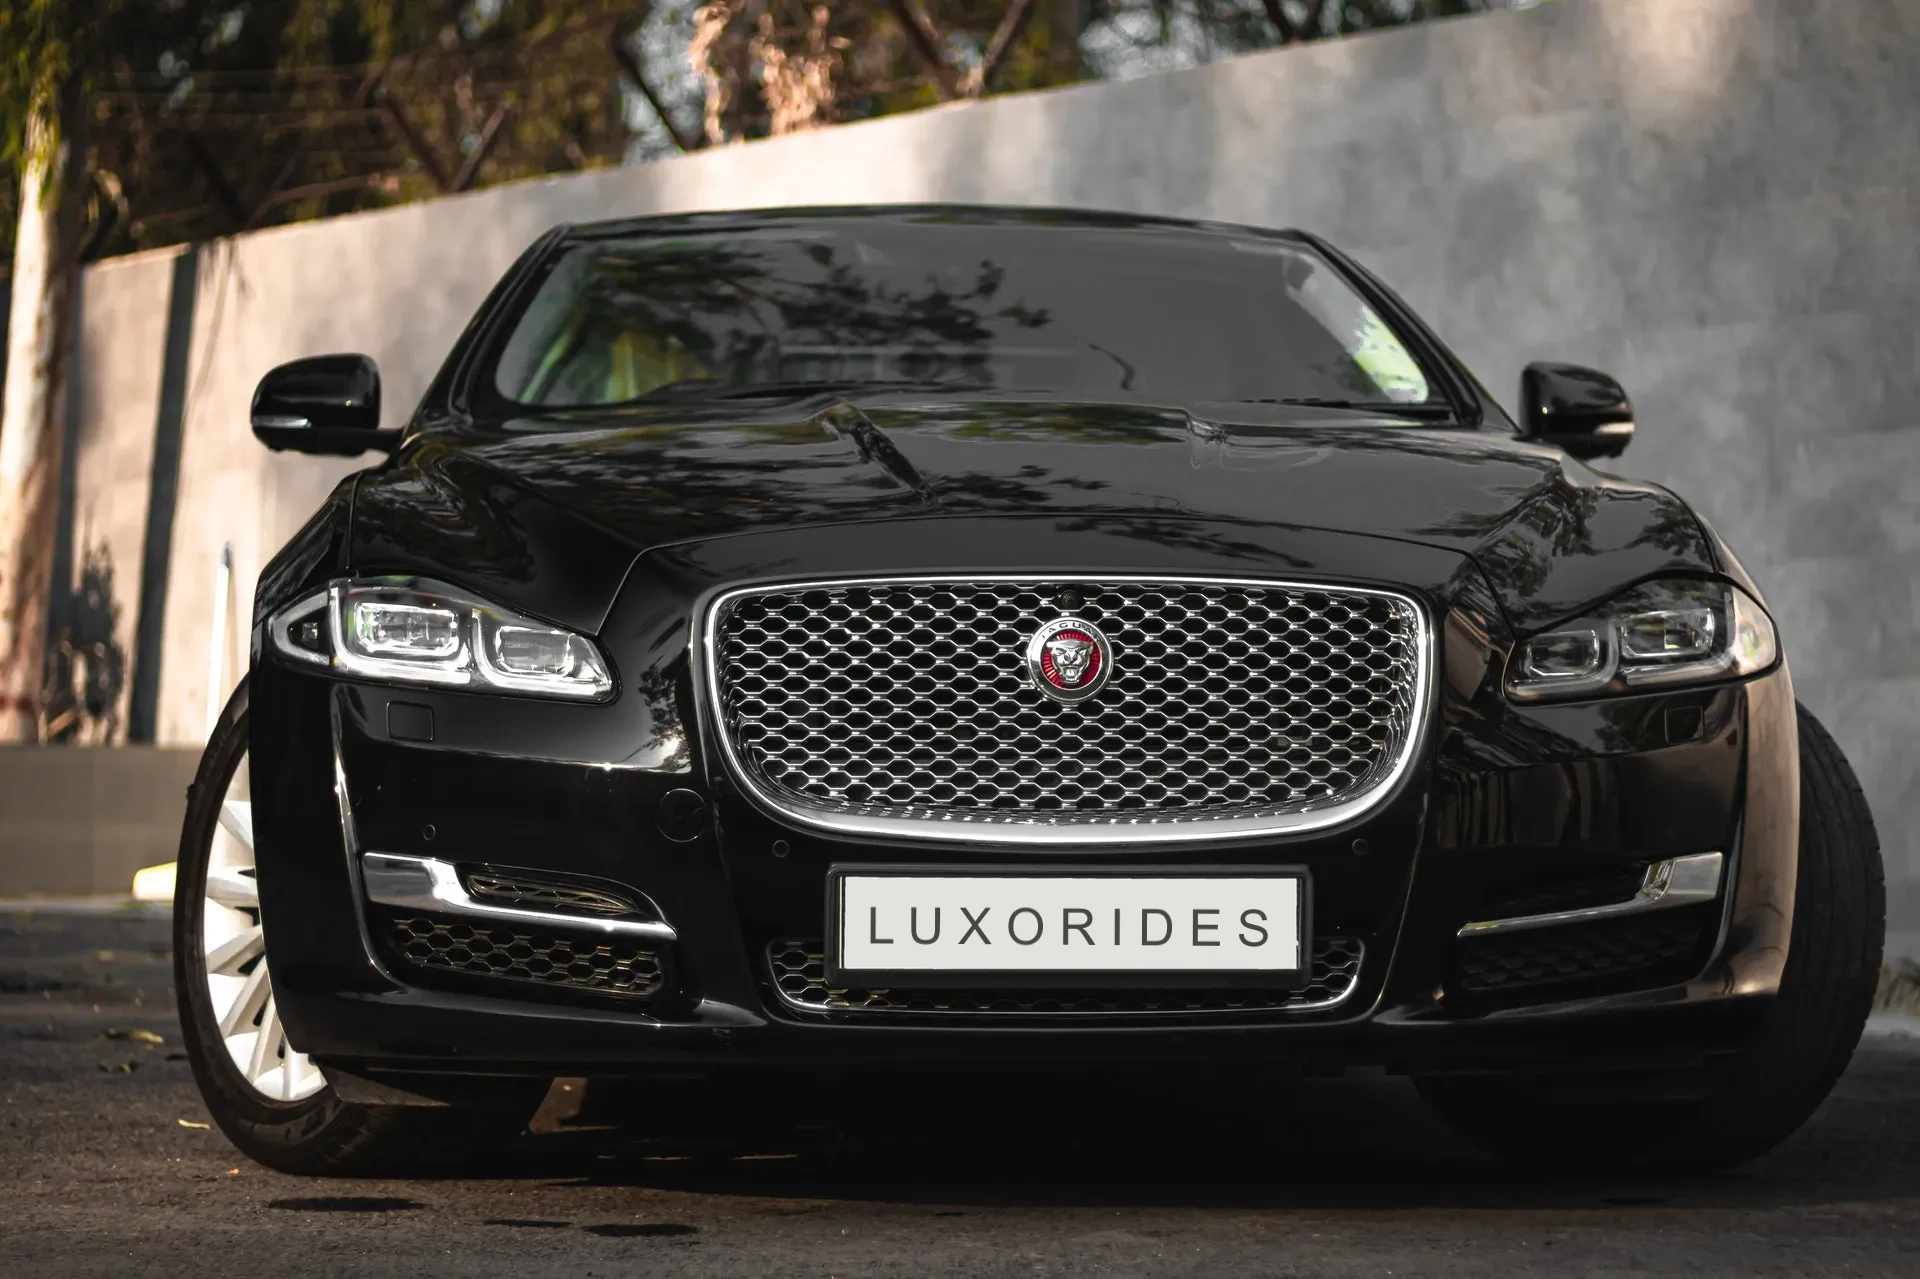 Rent Jaguar XJ L Sedan Luxury Cars for wedding, corporate tour at Luxorides ( www.Luxorides.com ) Luxury Car Rental (Delhi, Gurgaon, Noida, Ghaziabad)